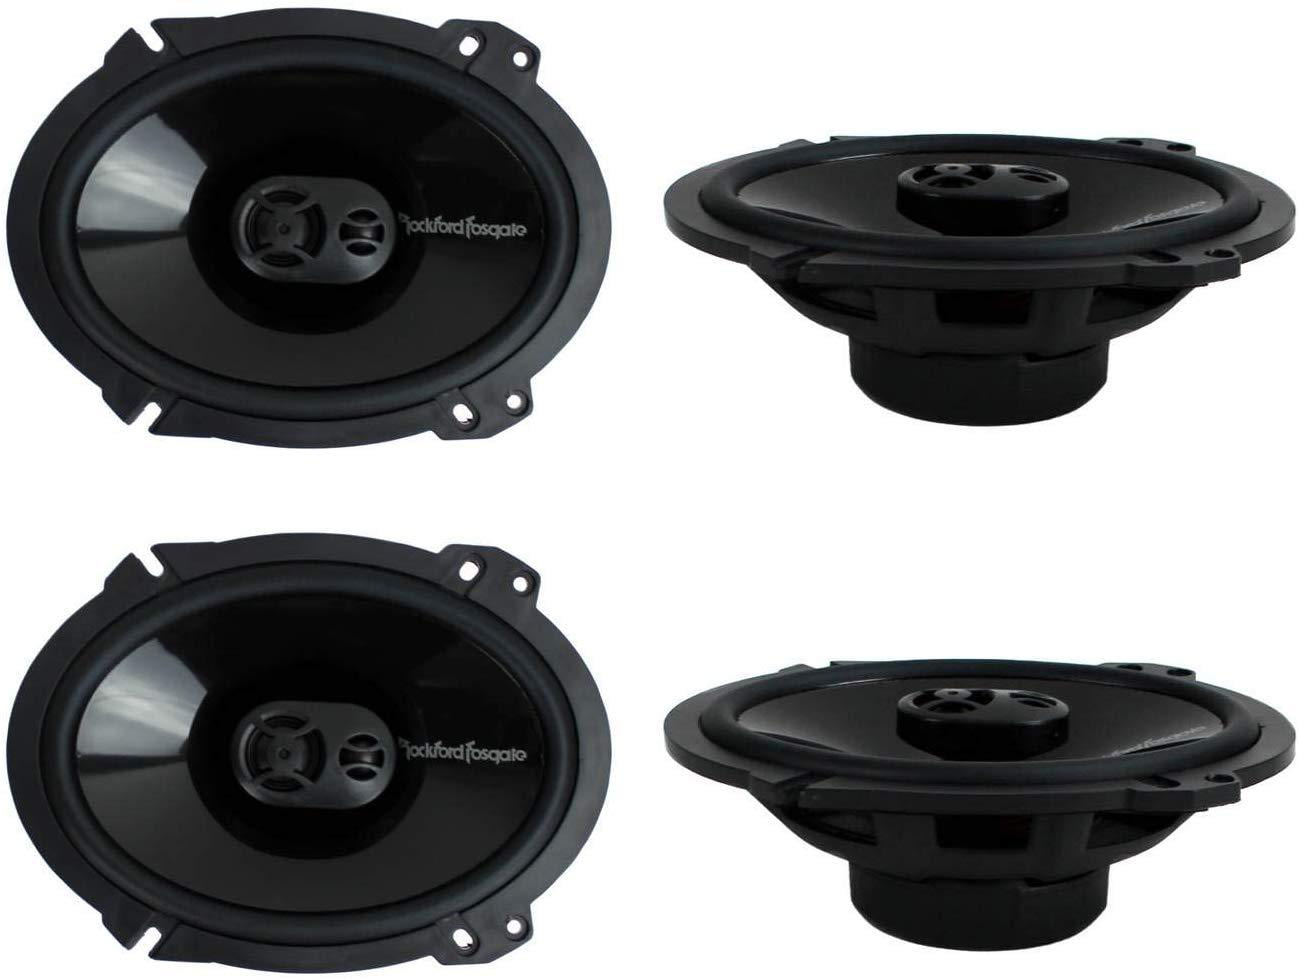 New Rockford Fosgate PUNCH P1683 6x8" 130 Watt 3 Way Car Coaxial Speakers Audio 